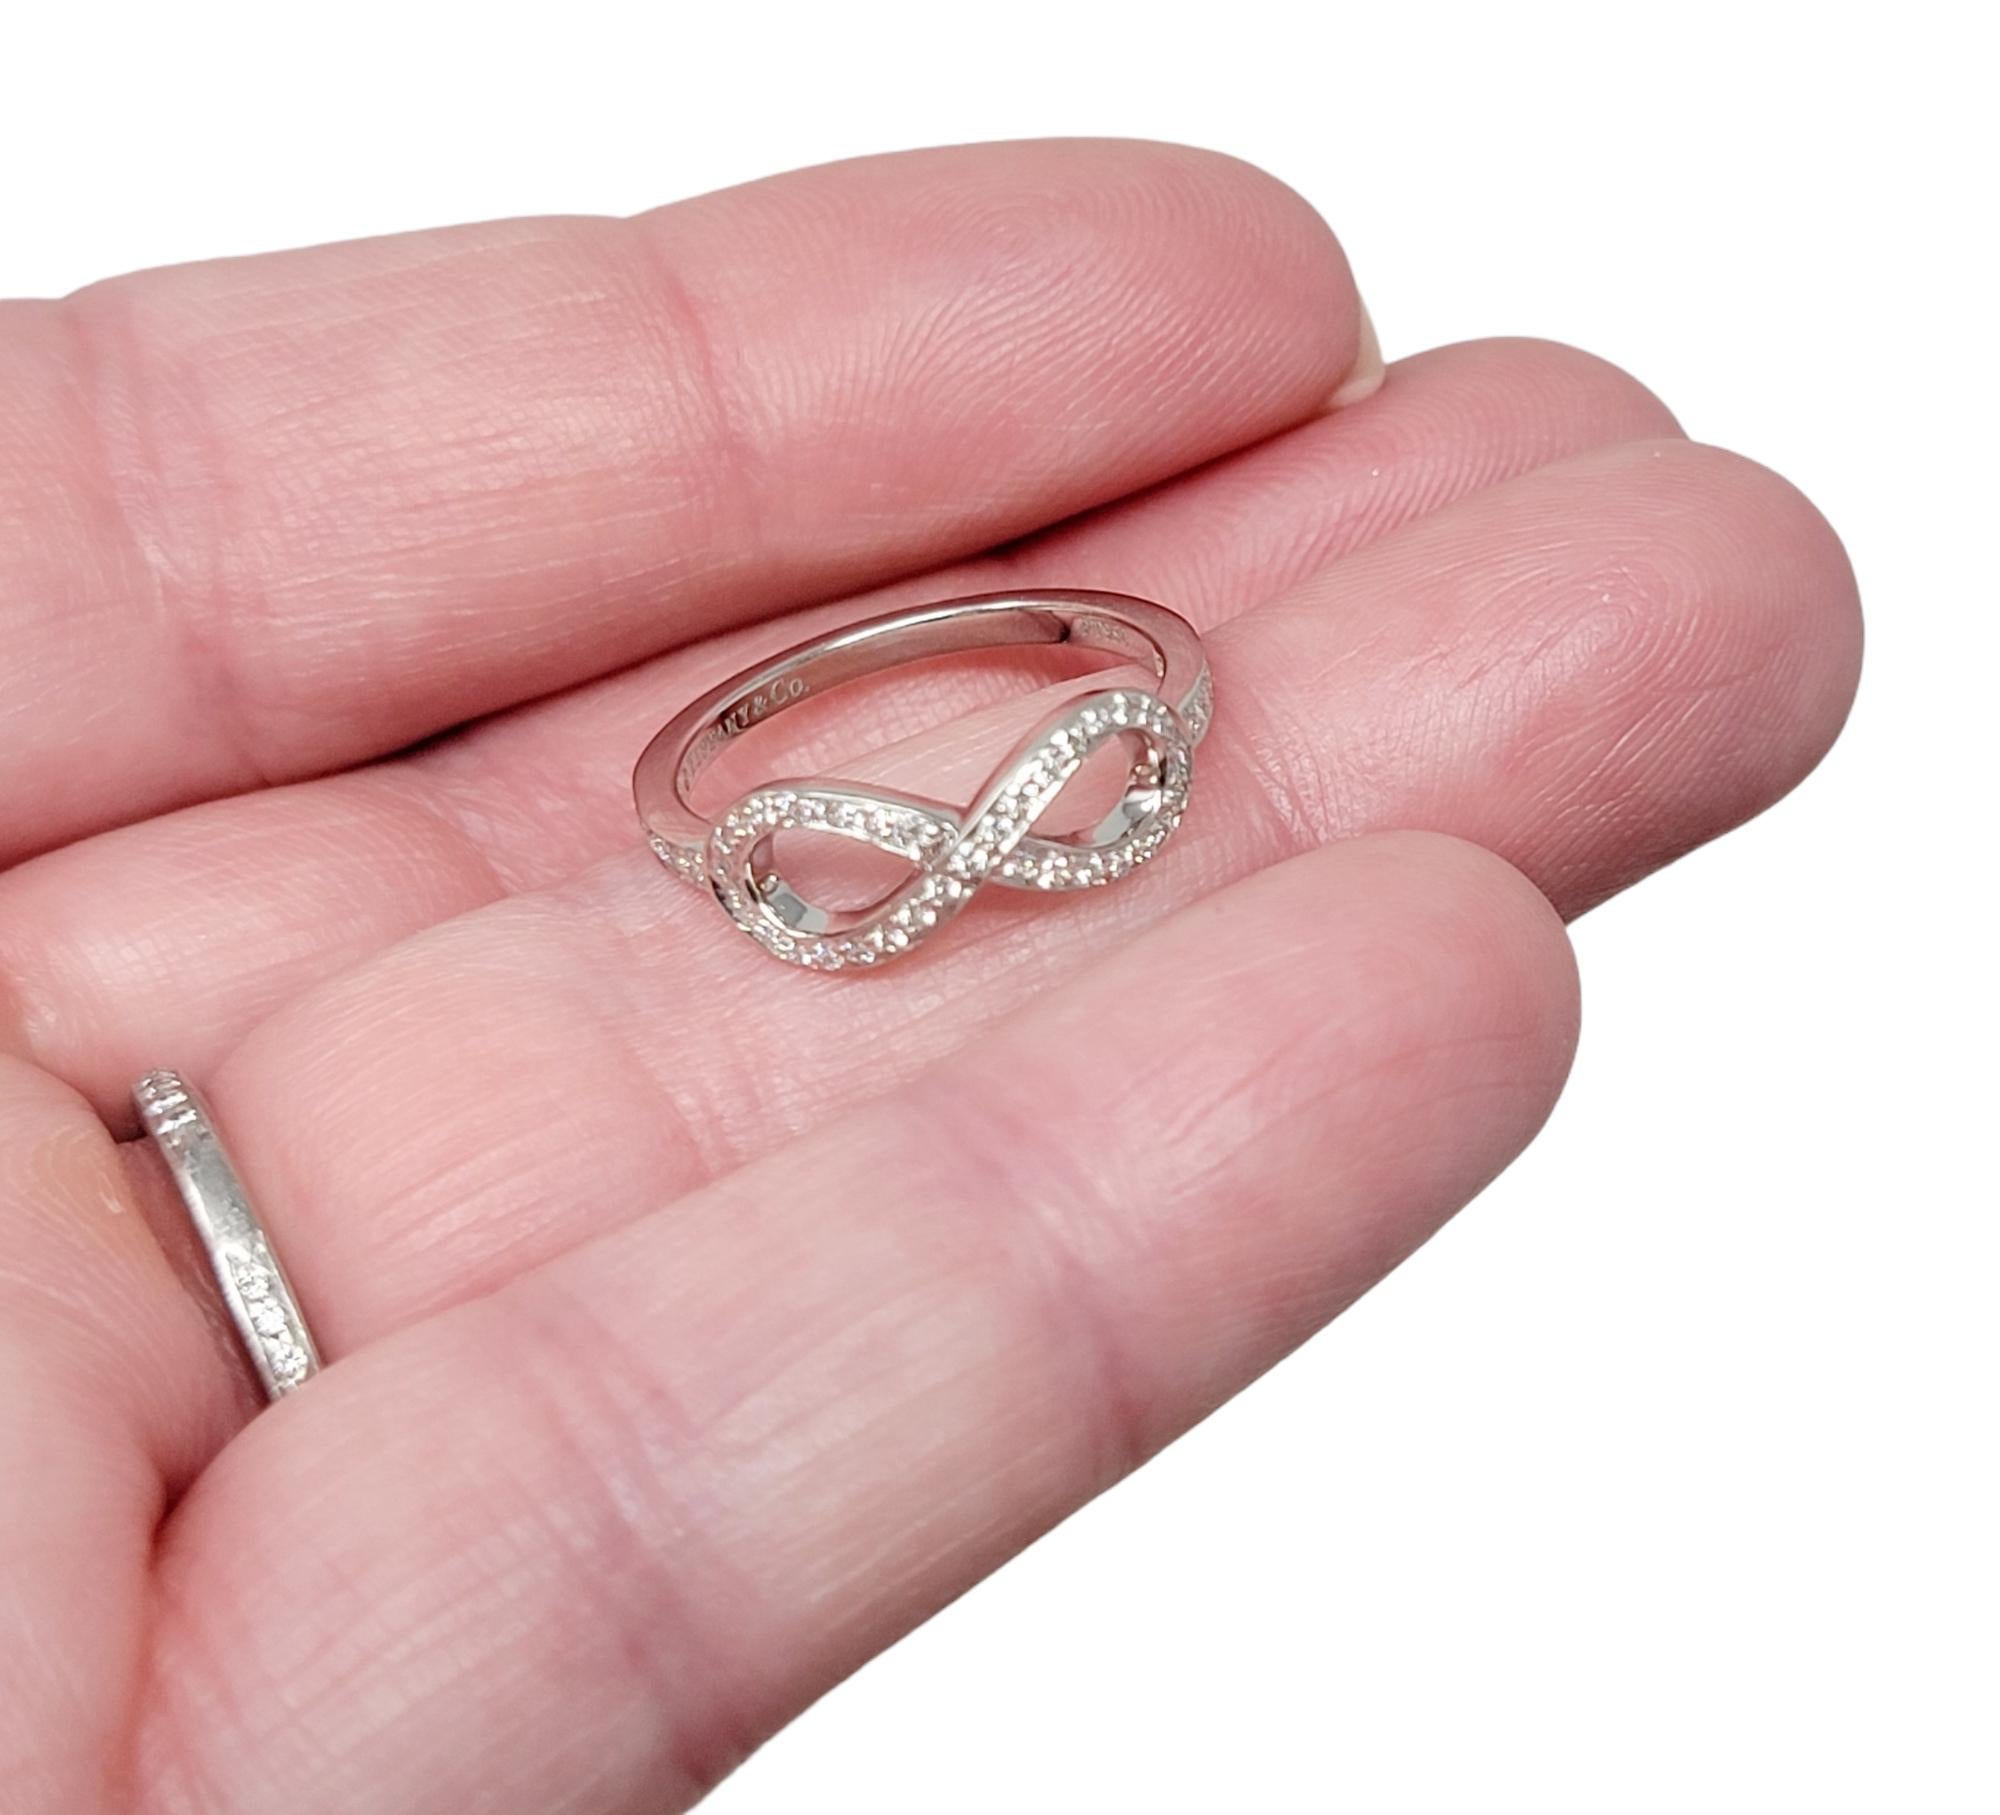 Tiffany & Co. Round Brilliant Pave Diamond Infinity Symbol Band Ring in Platinum 1